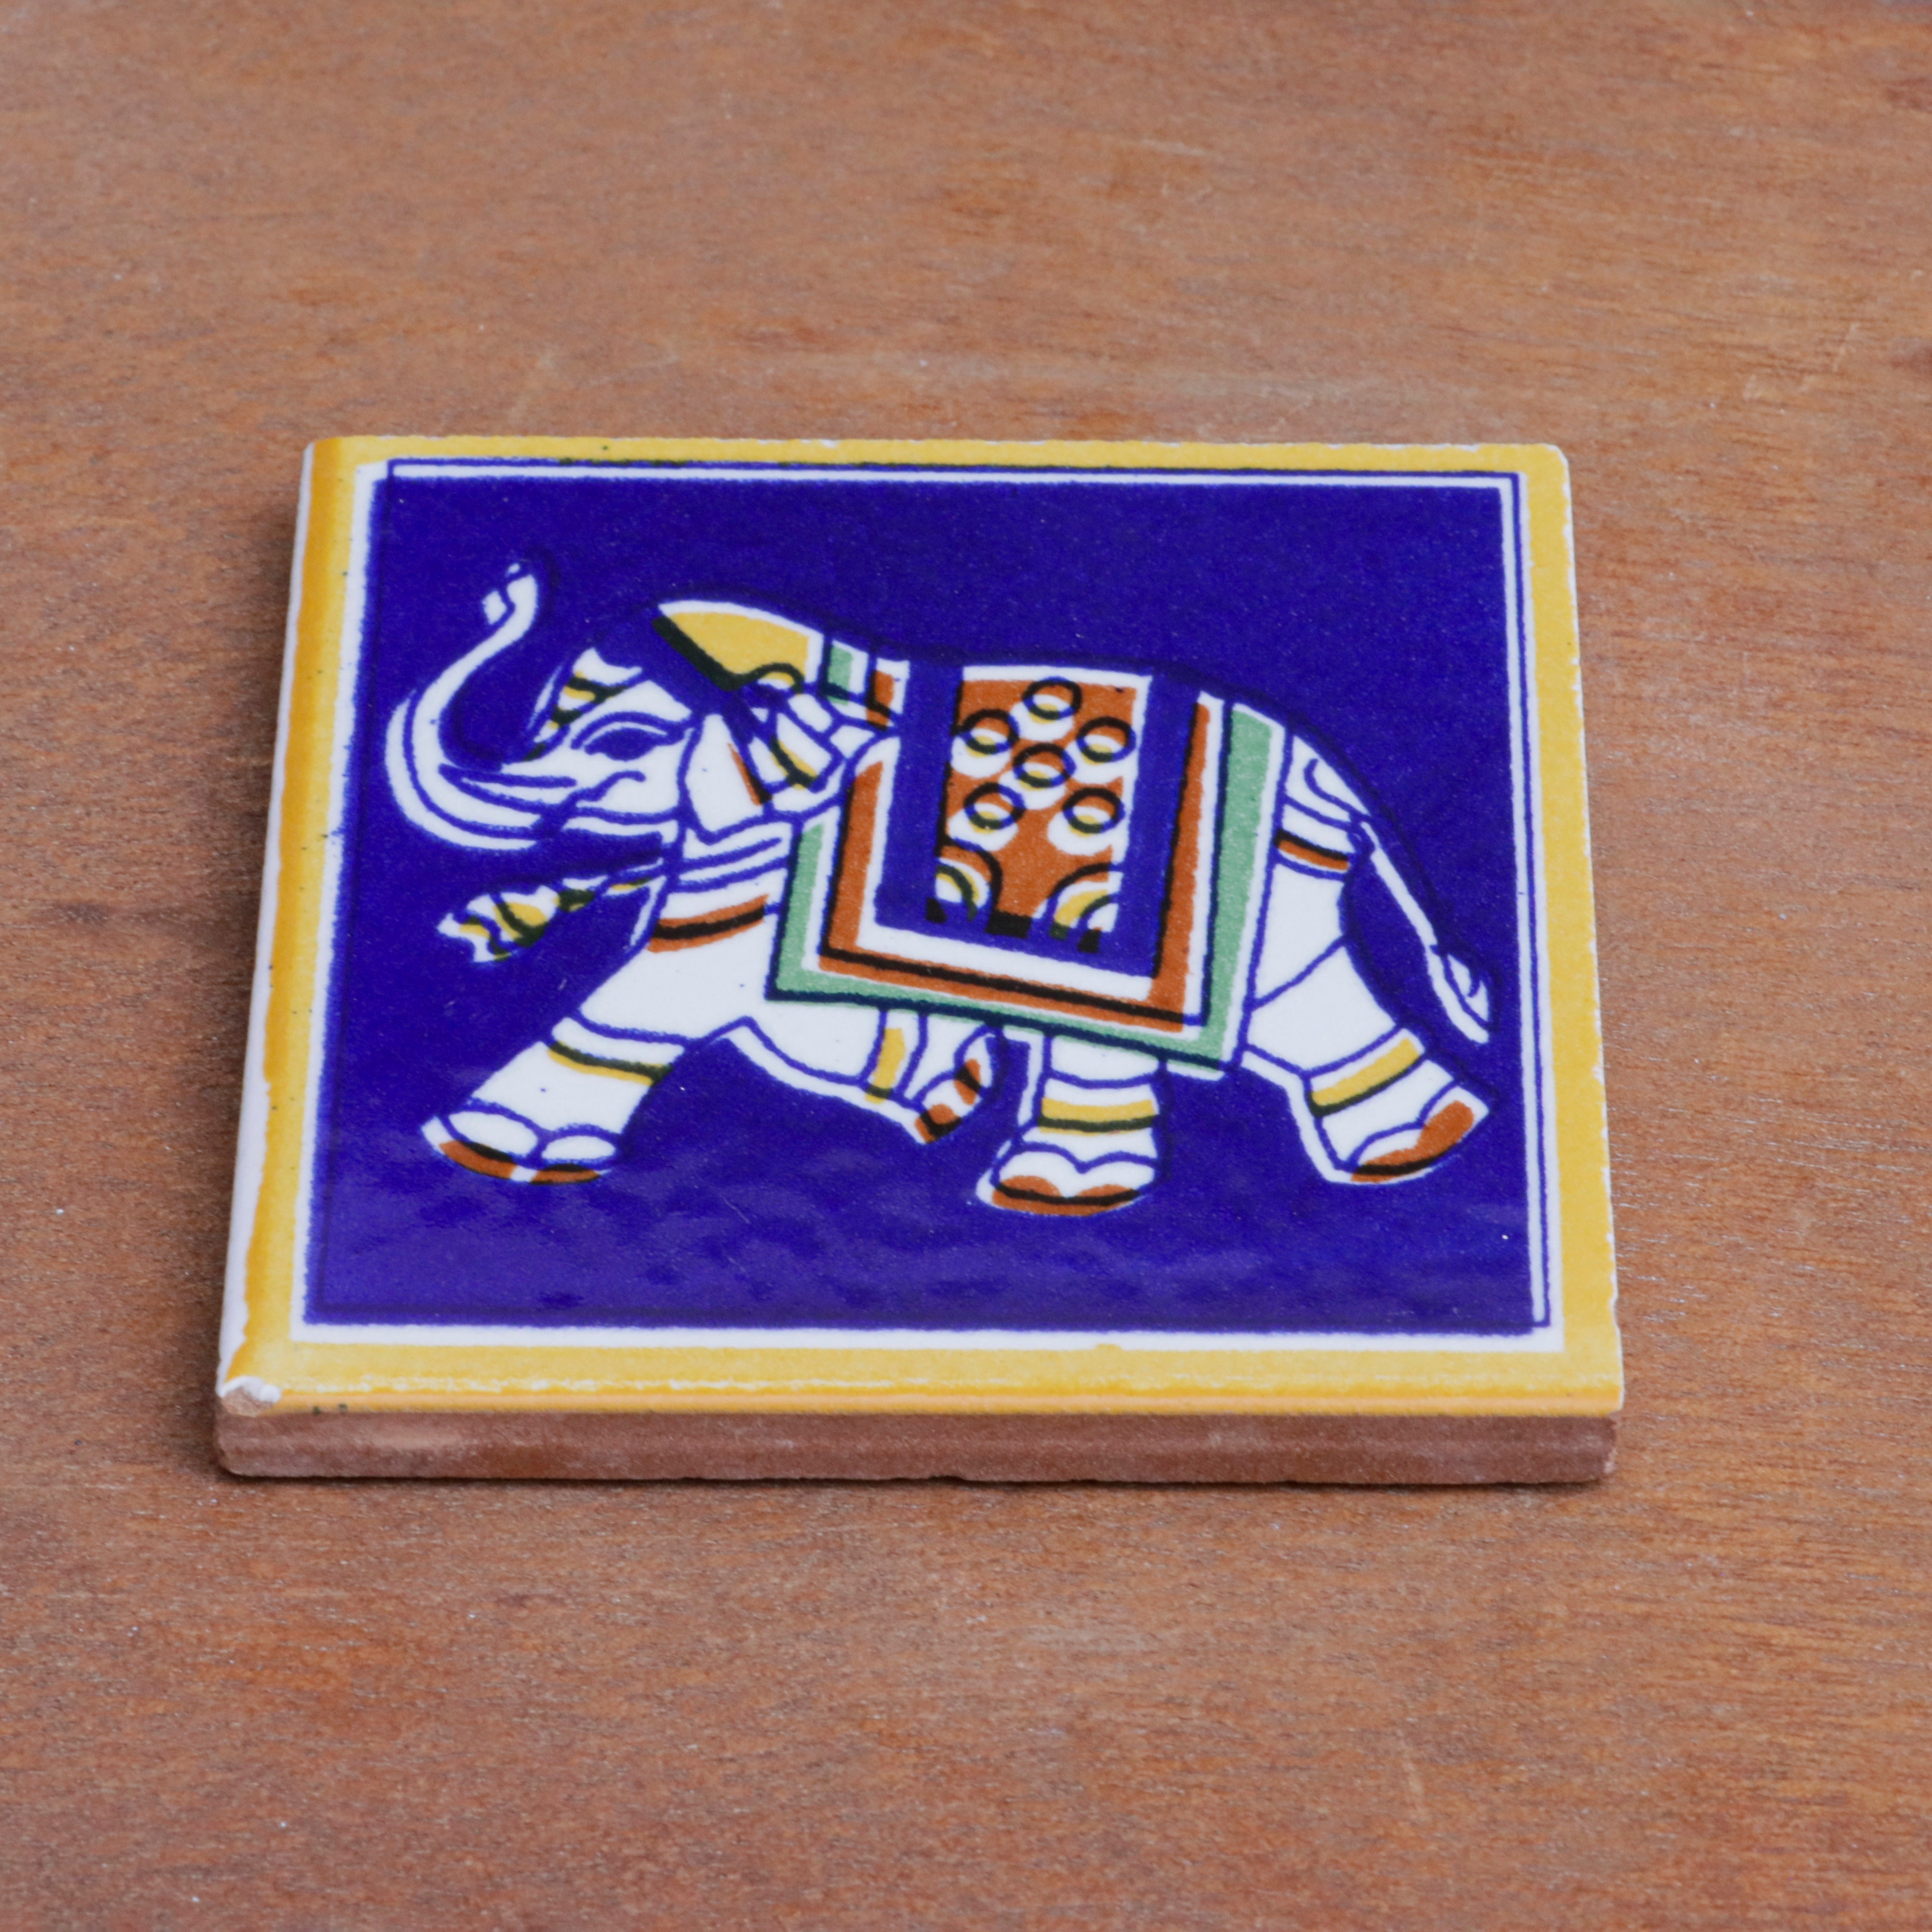 Aesthetic Vintage Elephant Designed Ceramic Square Tile Set of 2 Ceramic Tile